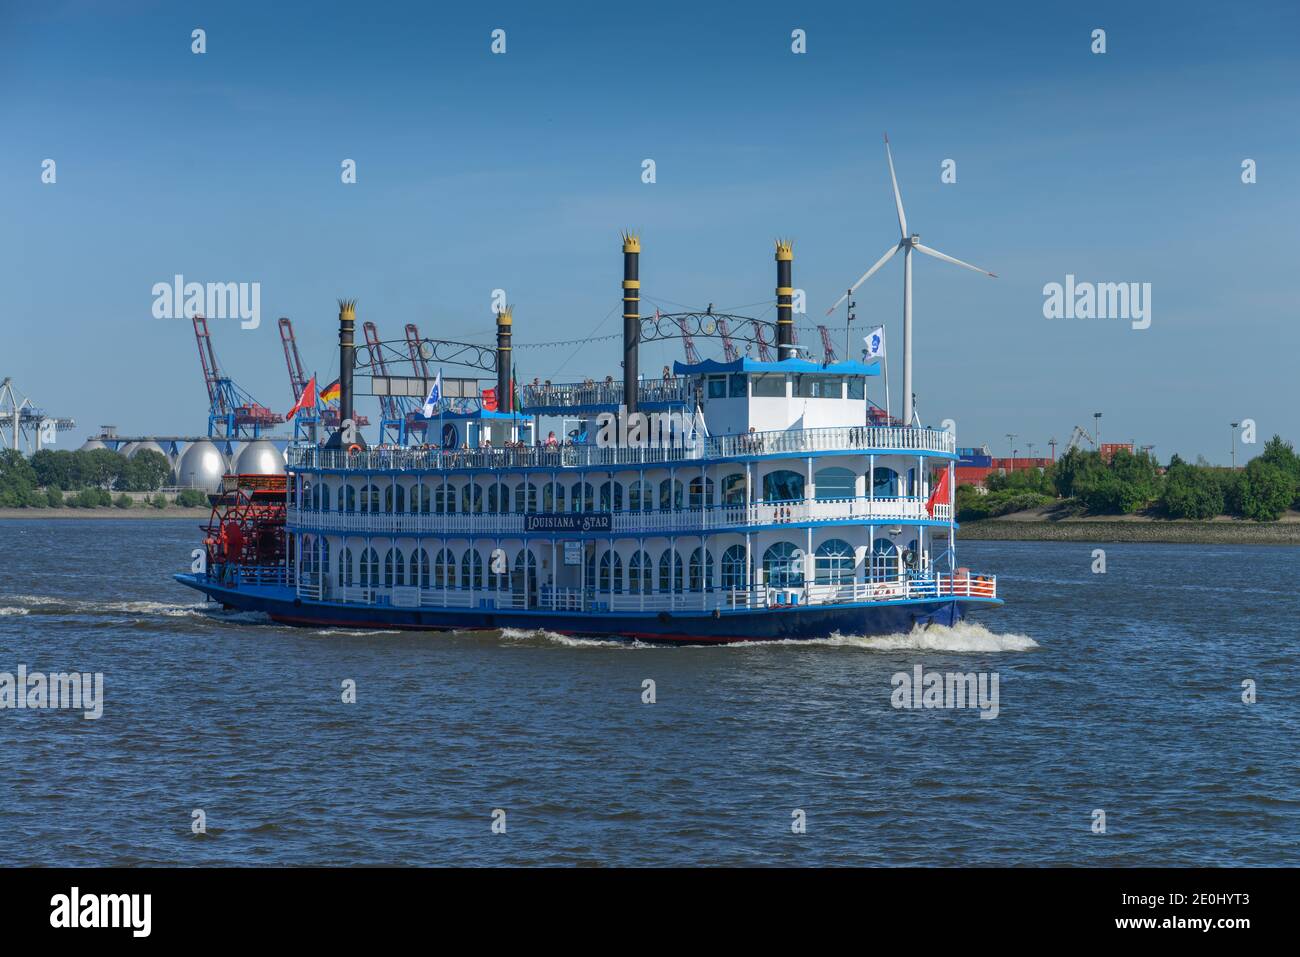 Louisiana Star, Hafenrundfahrt, Elbe, Hamburg, Deutschland Stock Photo